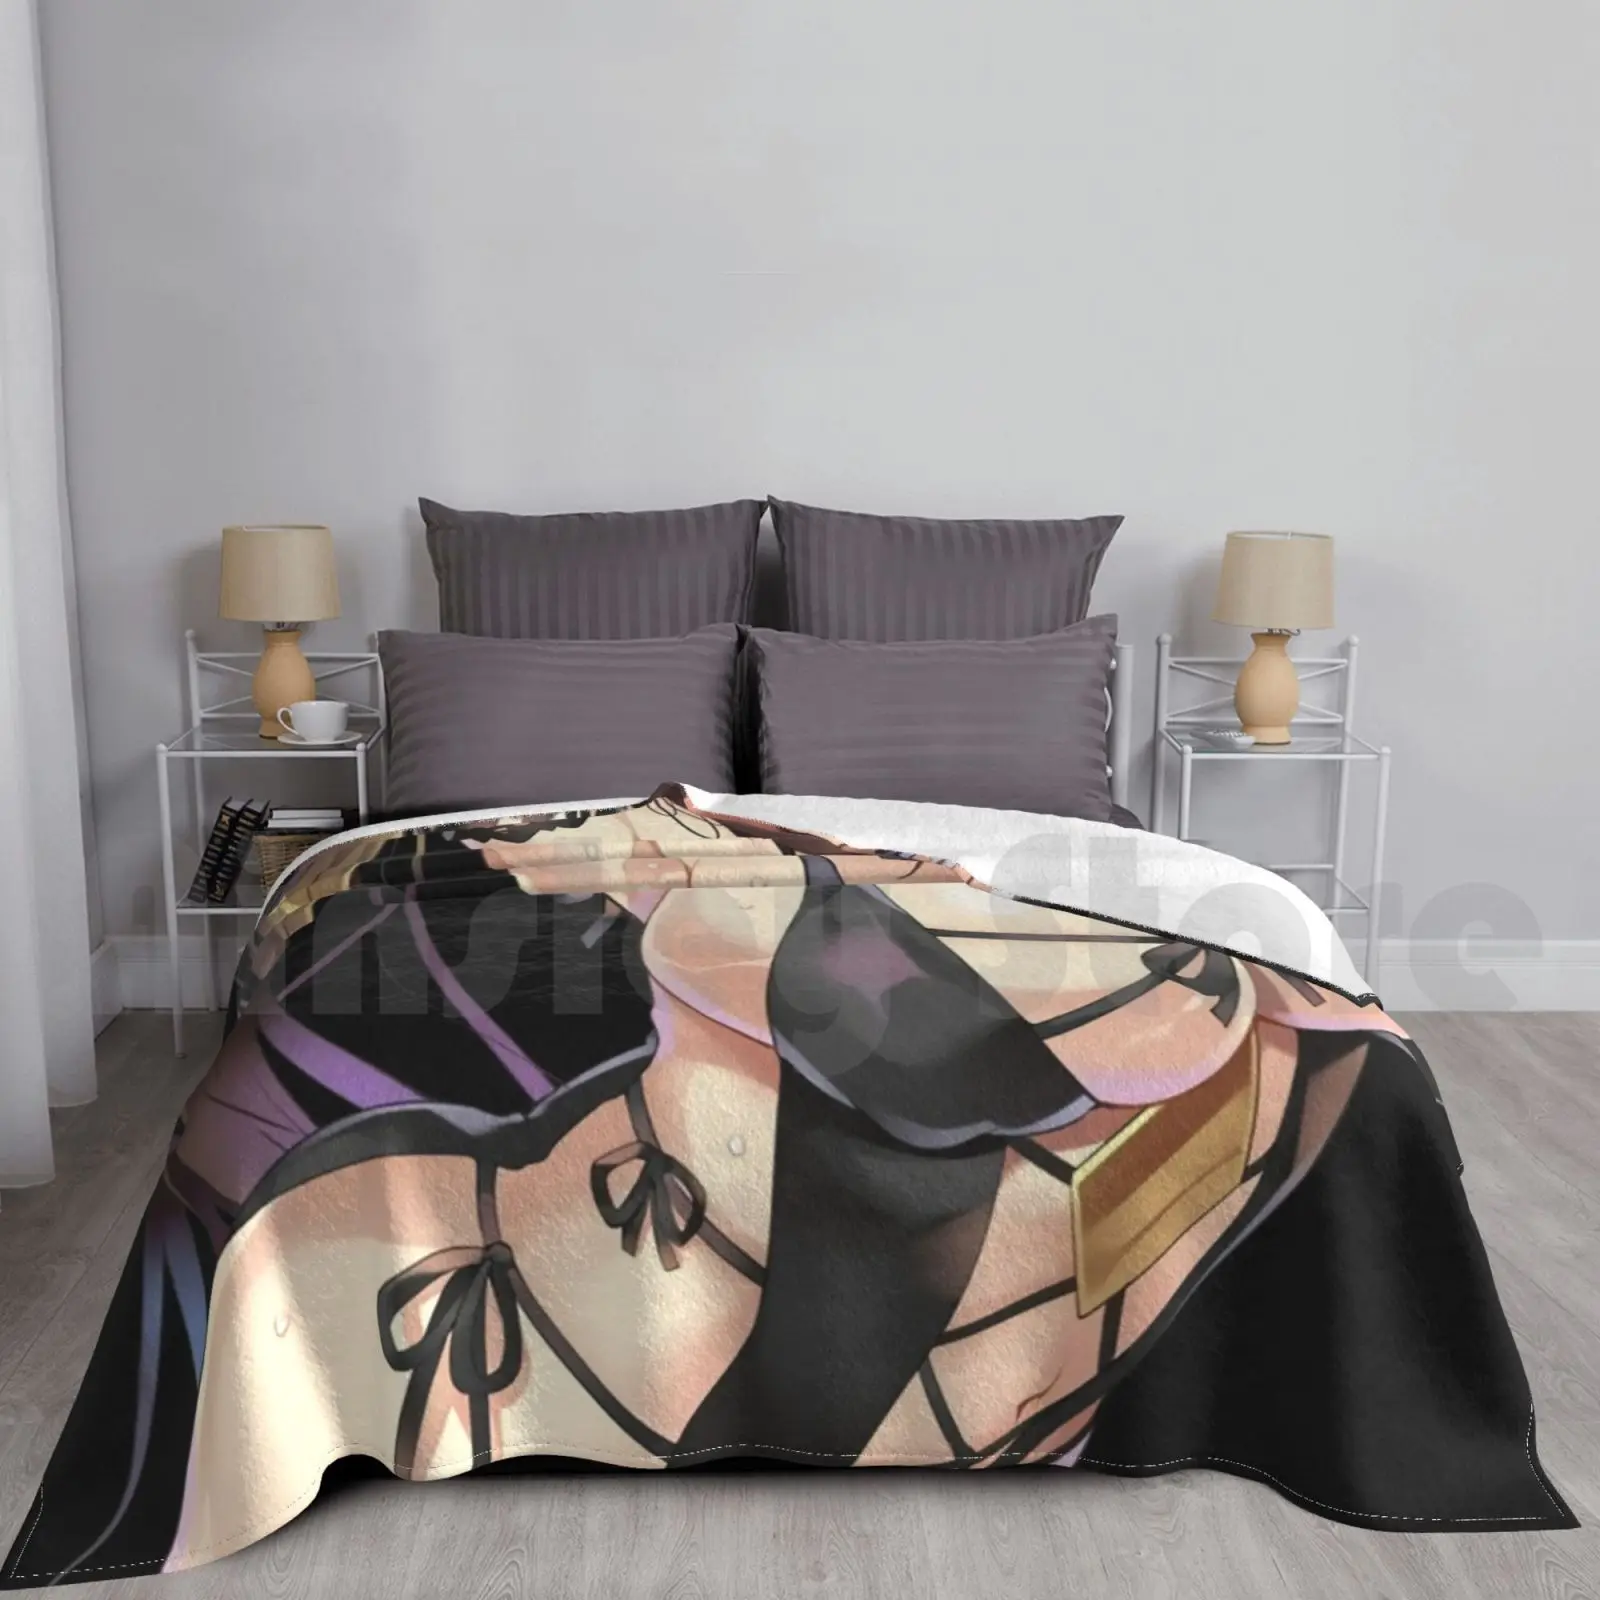 

Thicc Ecchi аниме девушка с большими титипами одеяло для дивана кровати путешествия Waifu Ecchi манга сексуальные аниме девушки груди